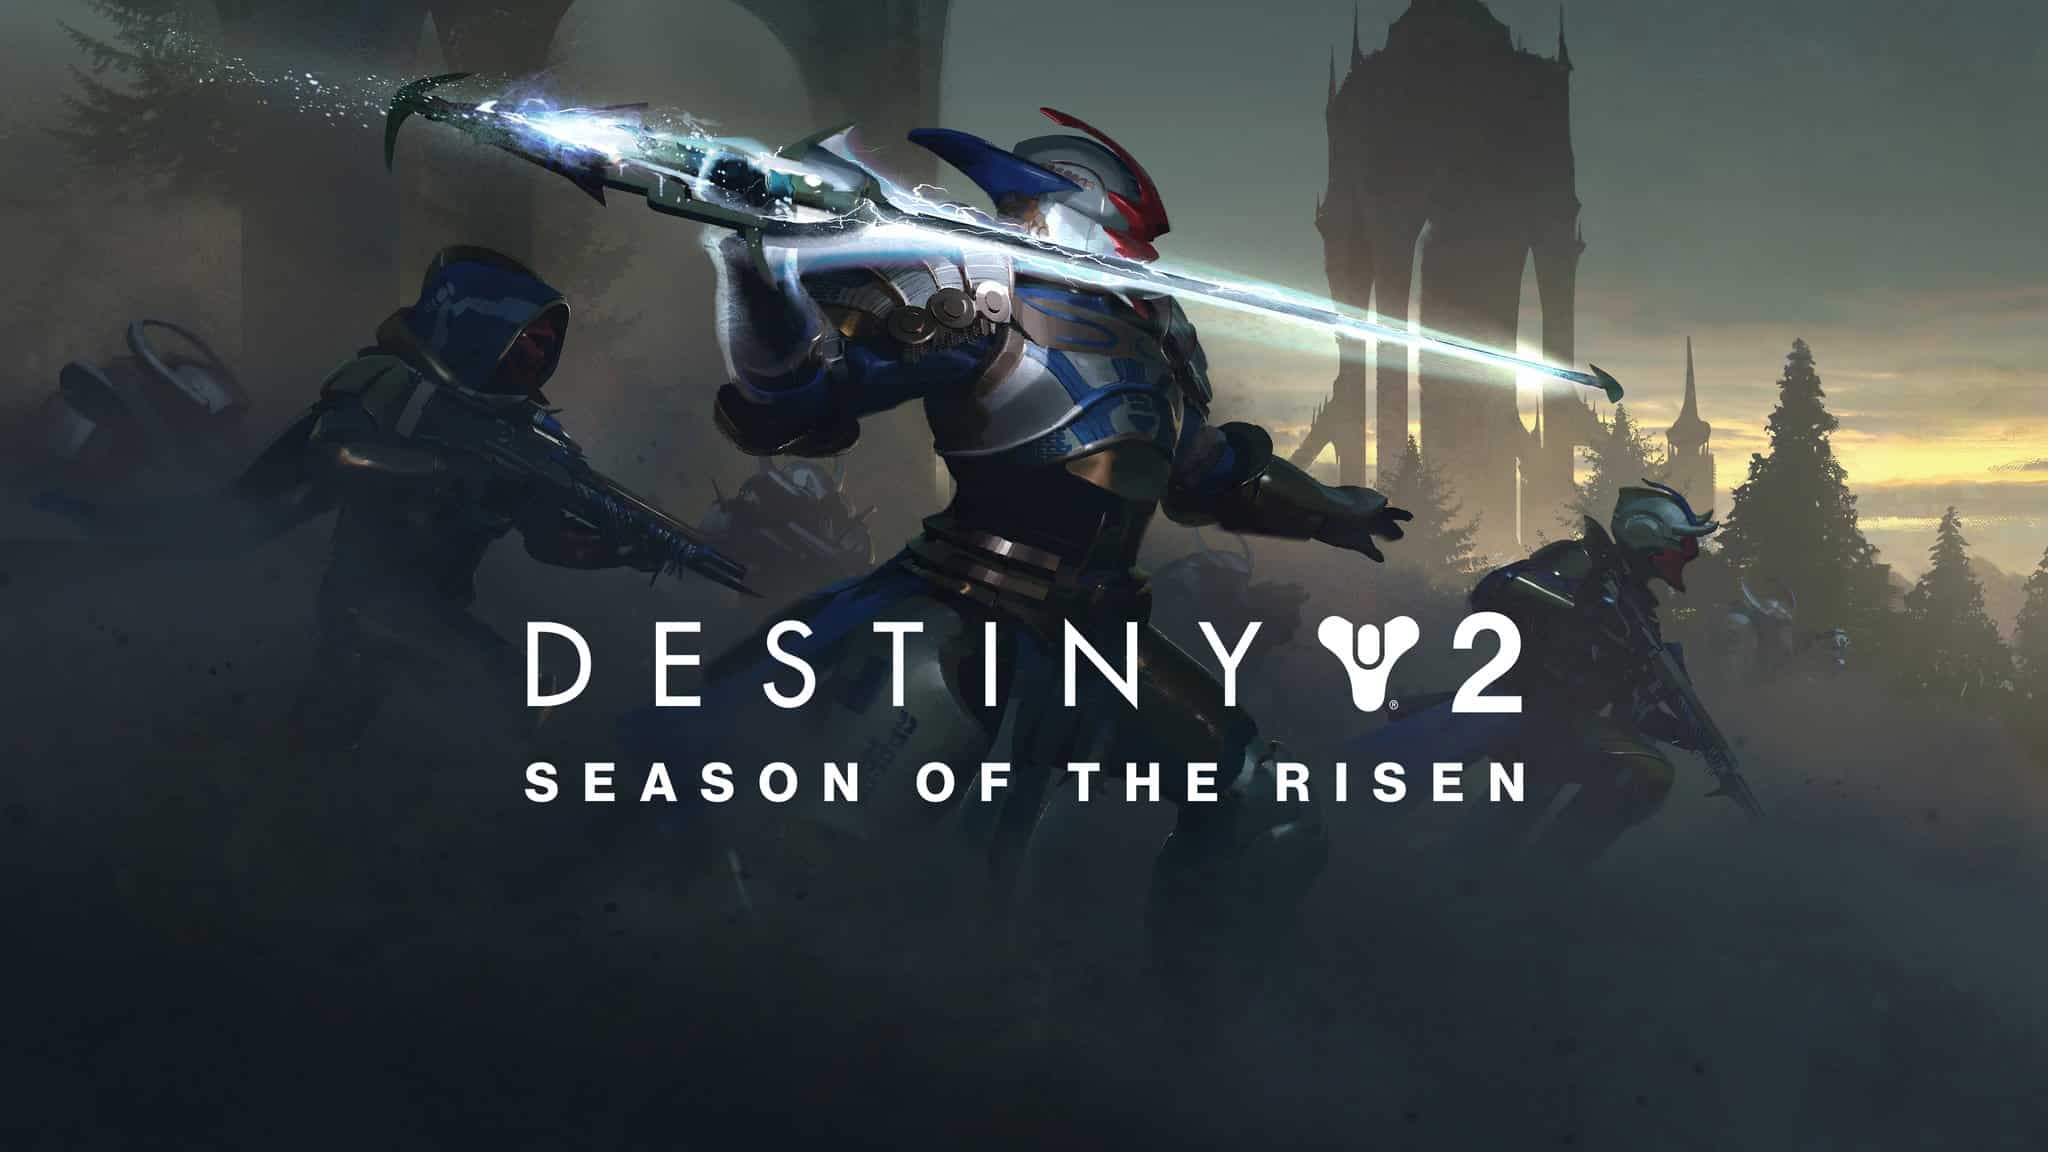 Destiny 2 Season of the Risen key art showing the Synaptic Spear